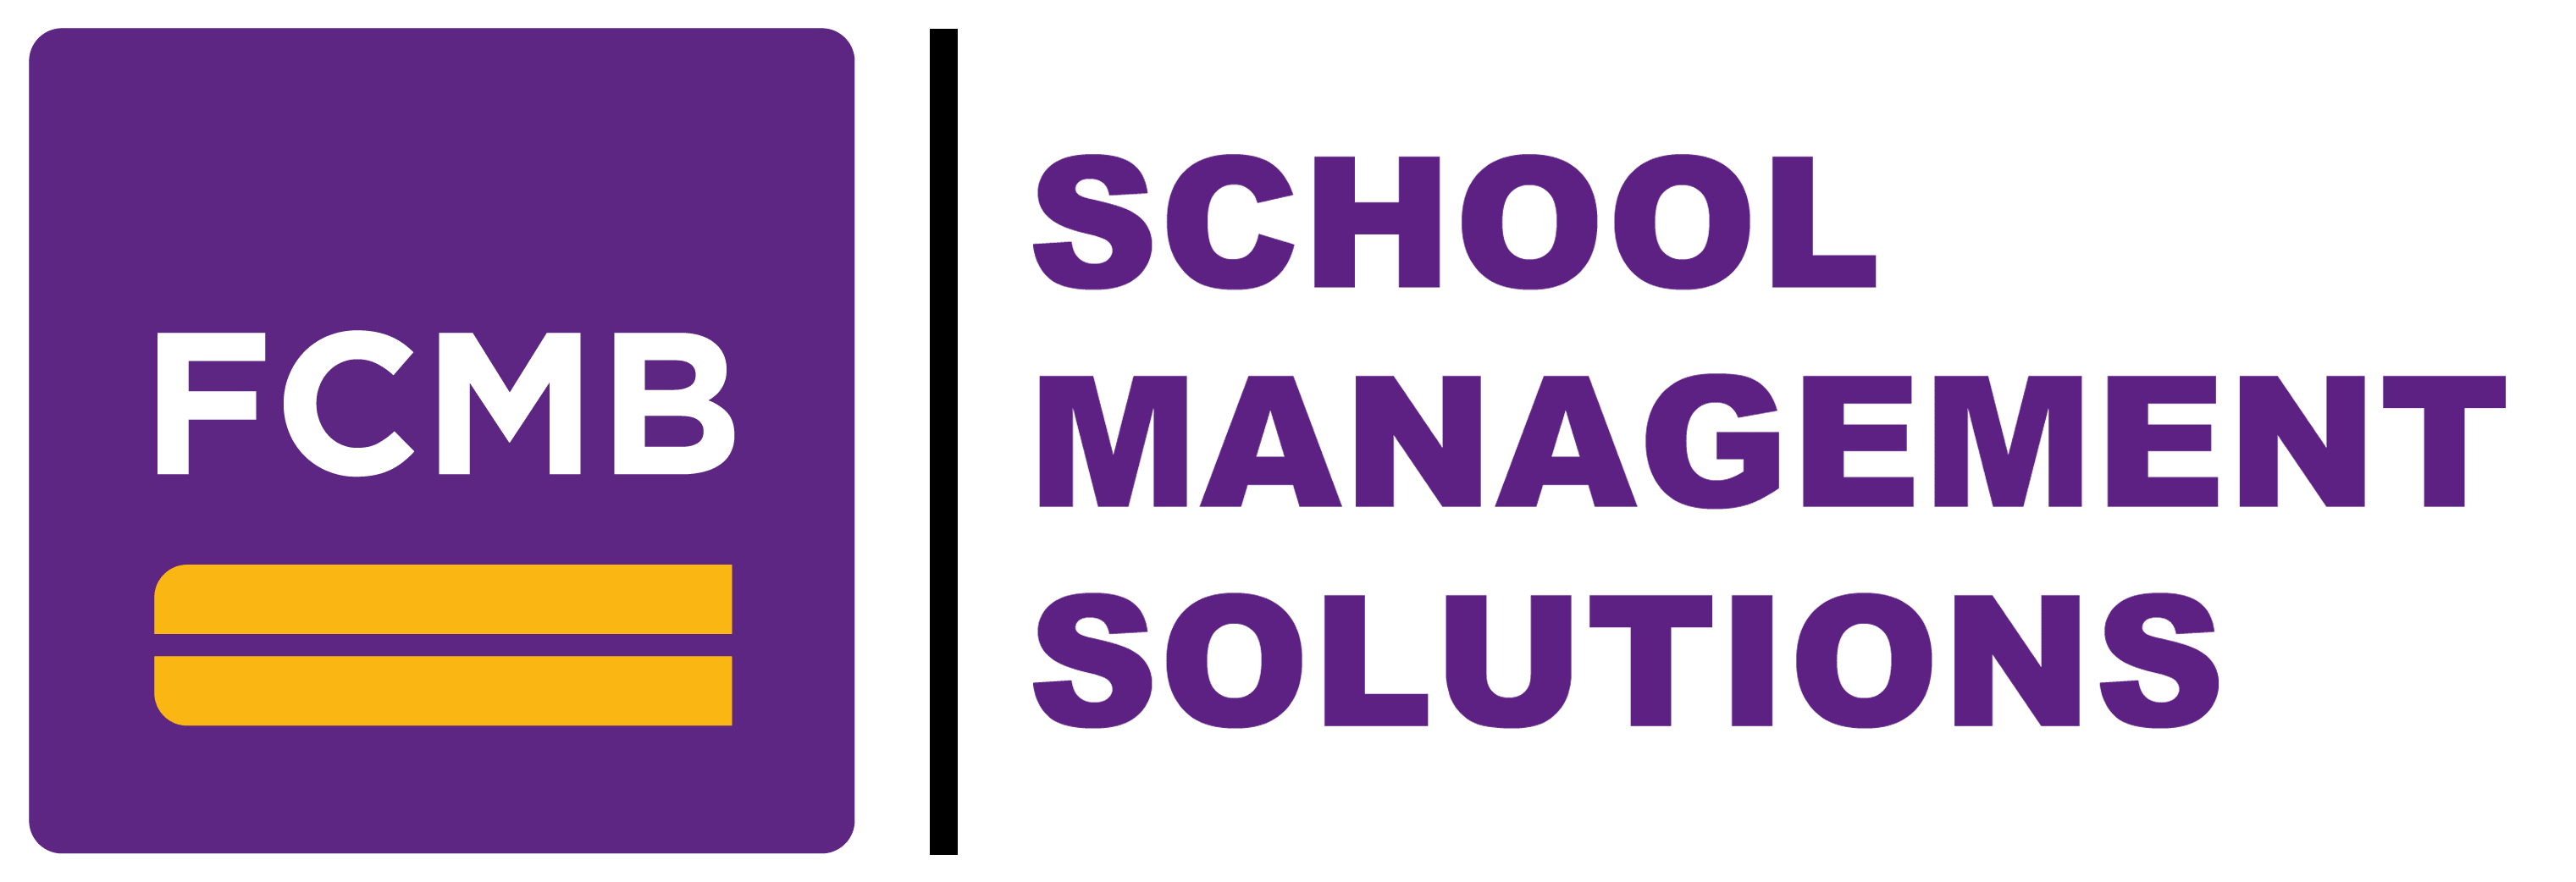 FCMB school management logo